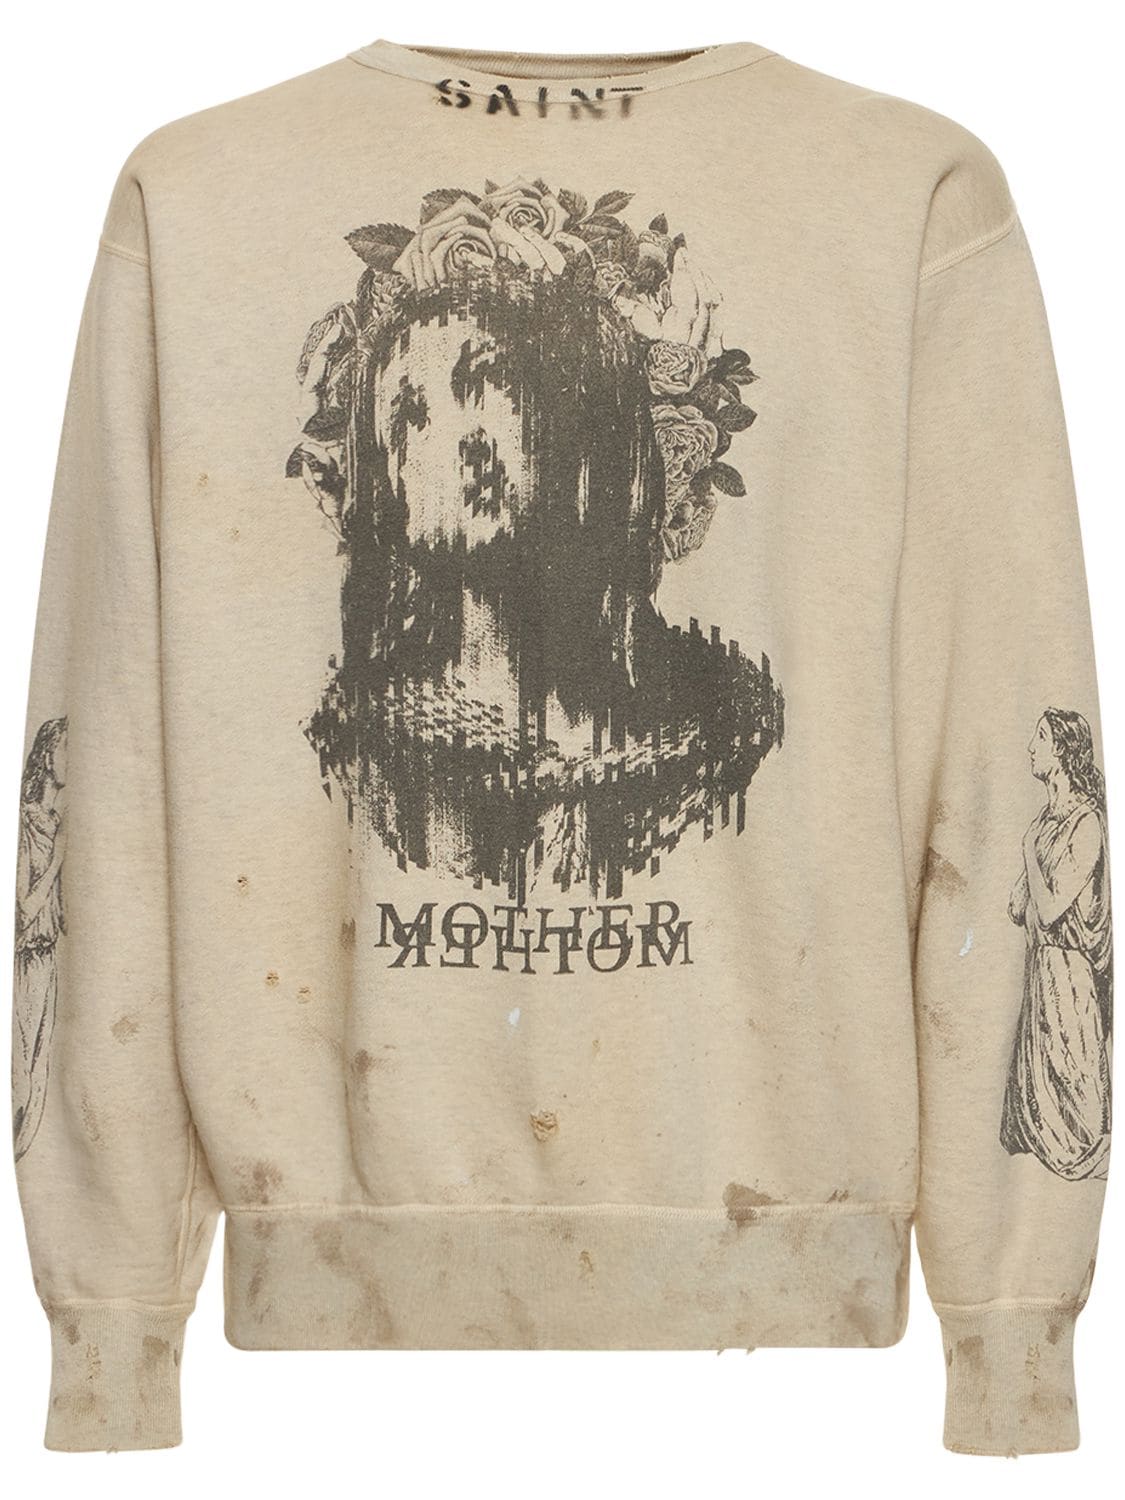 Saint Michael X Kk Sweatshirt – MEN > CLOTHING > SWEATSHIRTS